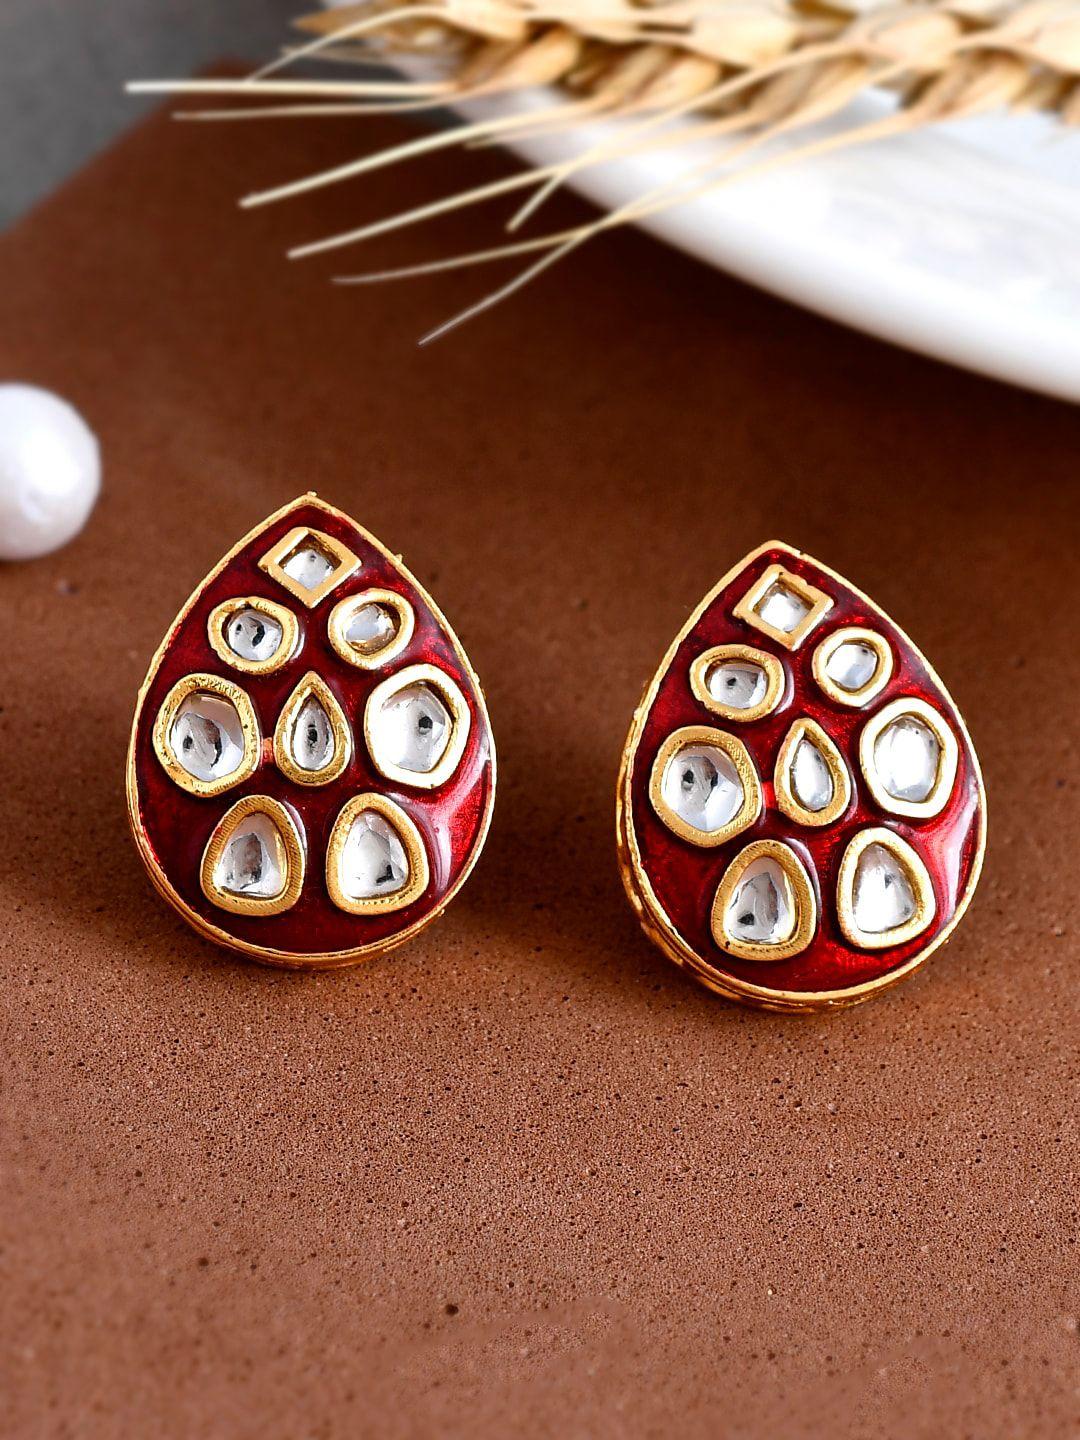 shoshaa-gold-plated-teardrop-shaped-studs-earrings